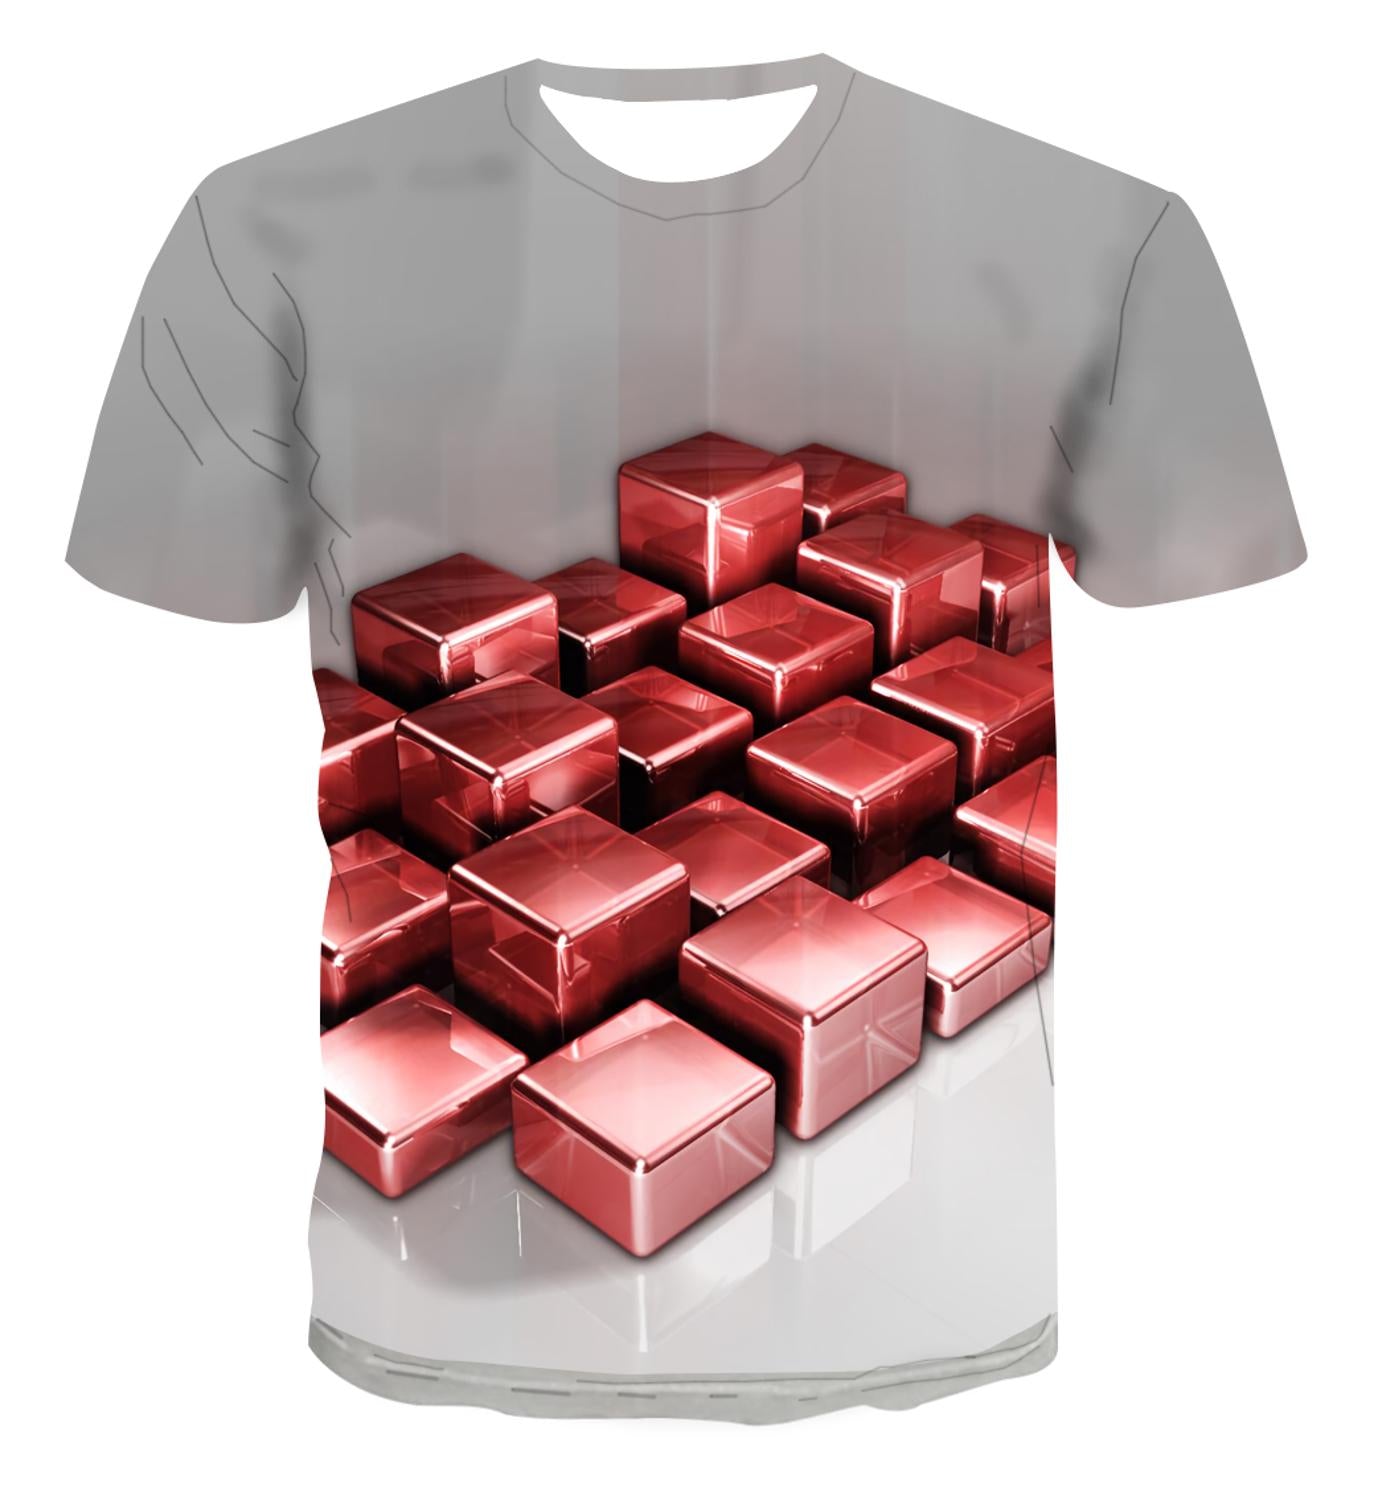 Psychedelic T-Shirt Men's 3D T-Shirt Vertigo Printed T-Shirt Short Sleeve Casual Summer Top S-6xl